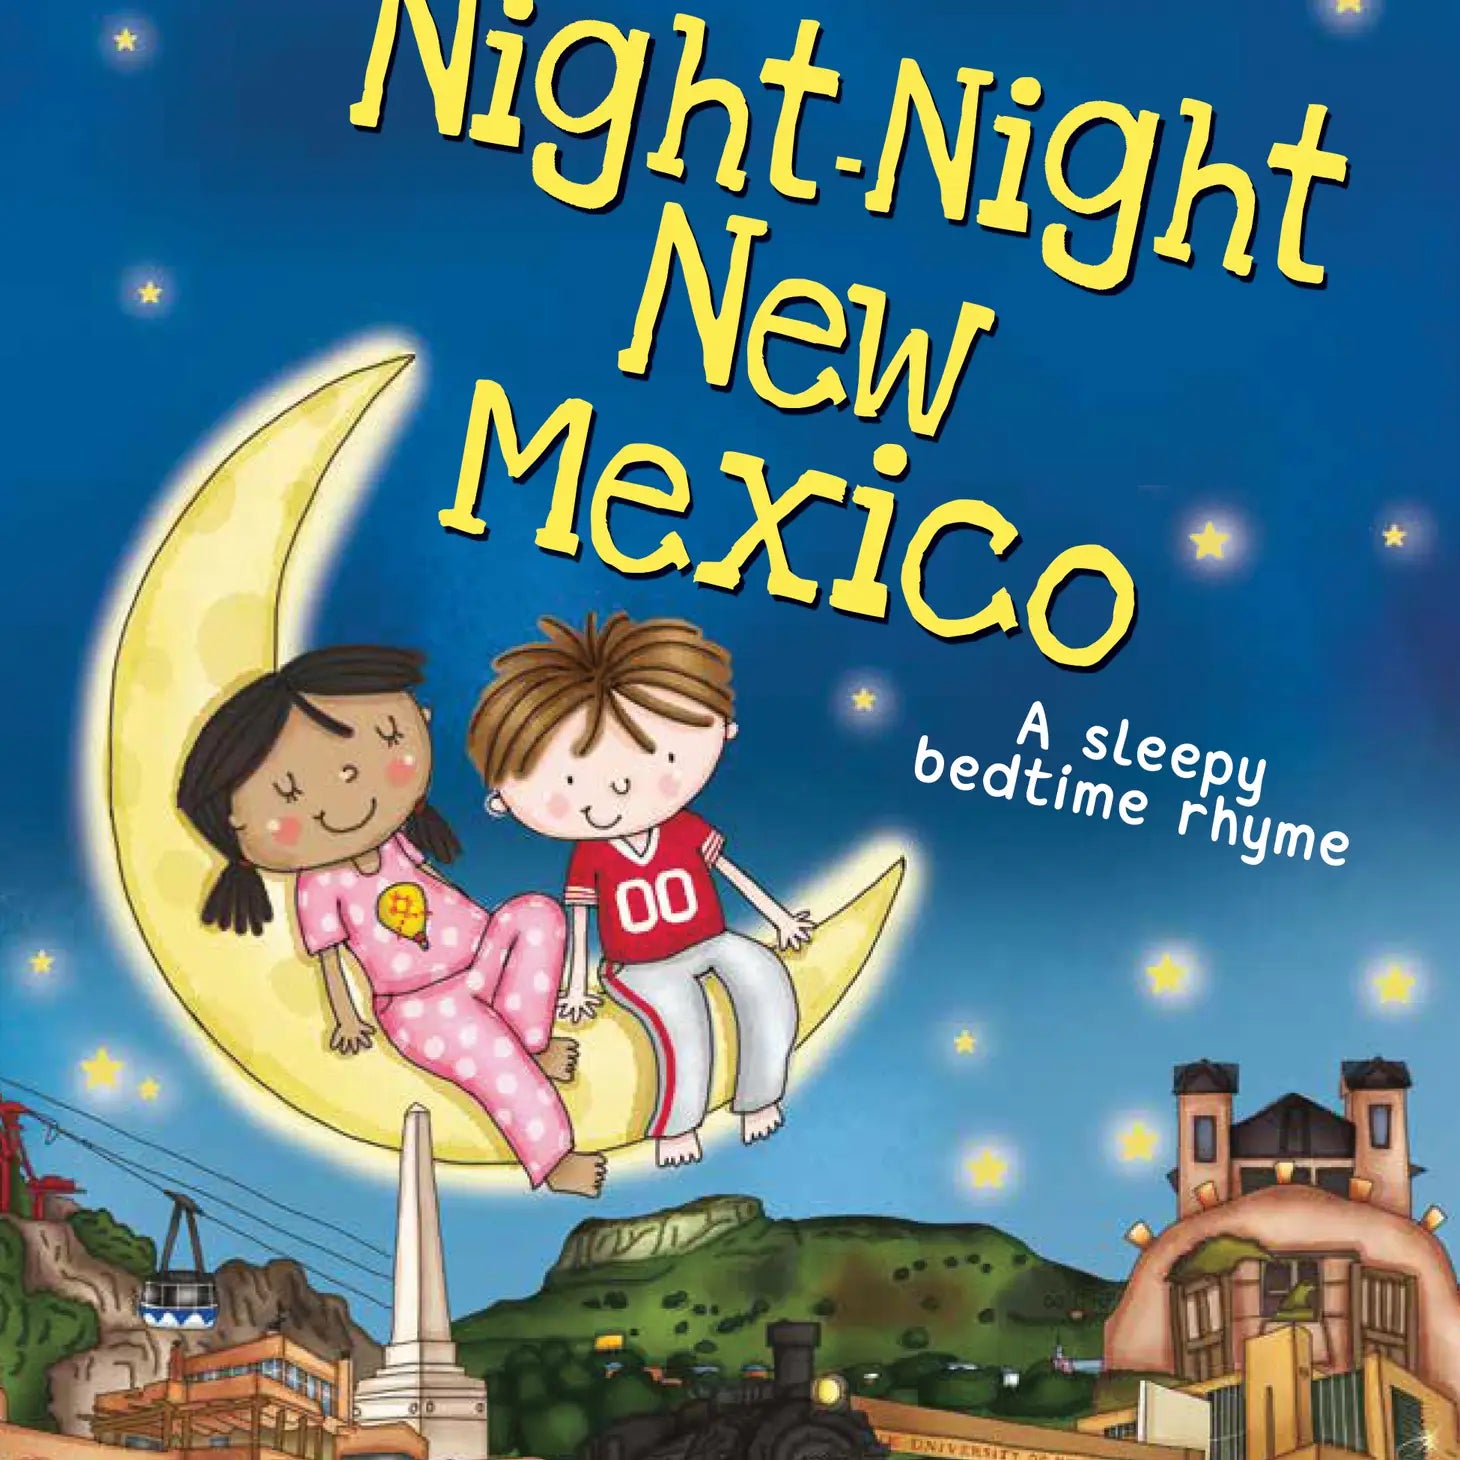 NIGHT-NIGHT NEW MEXICO